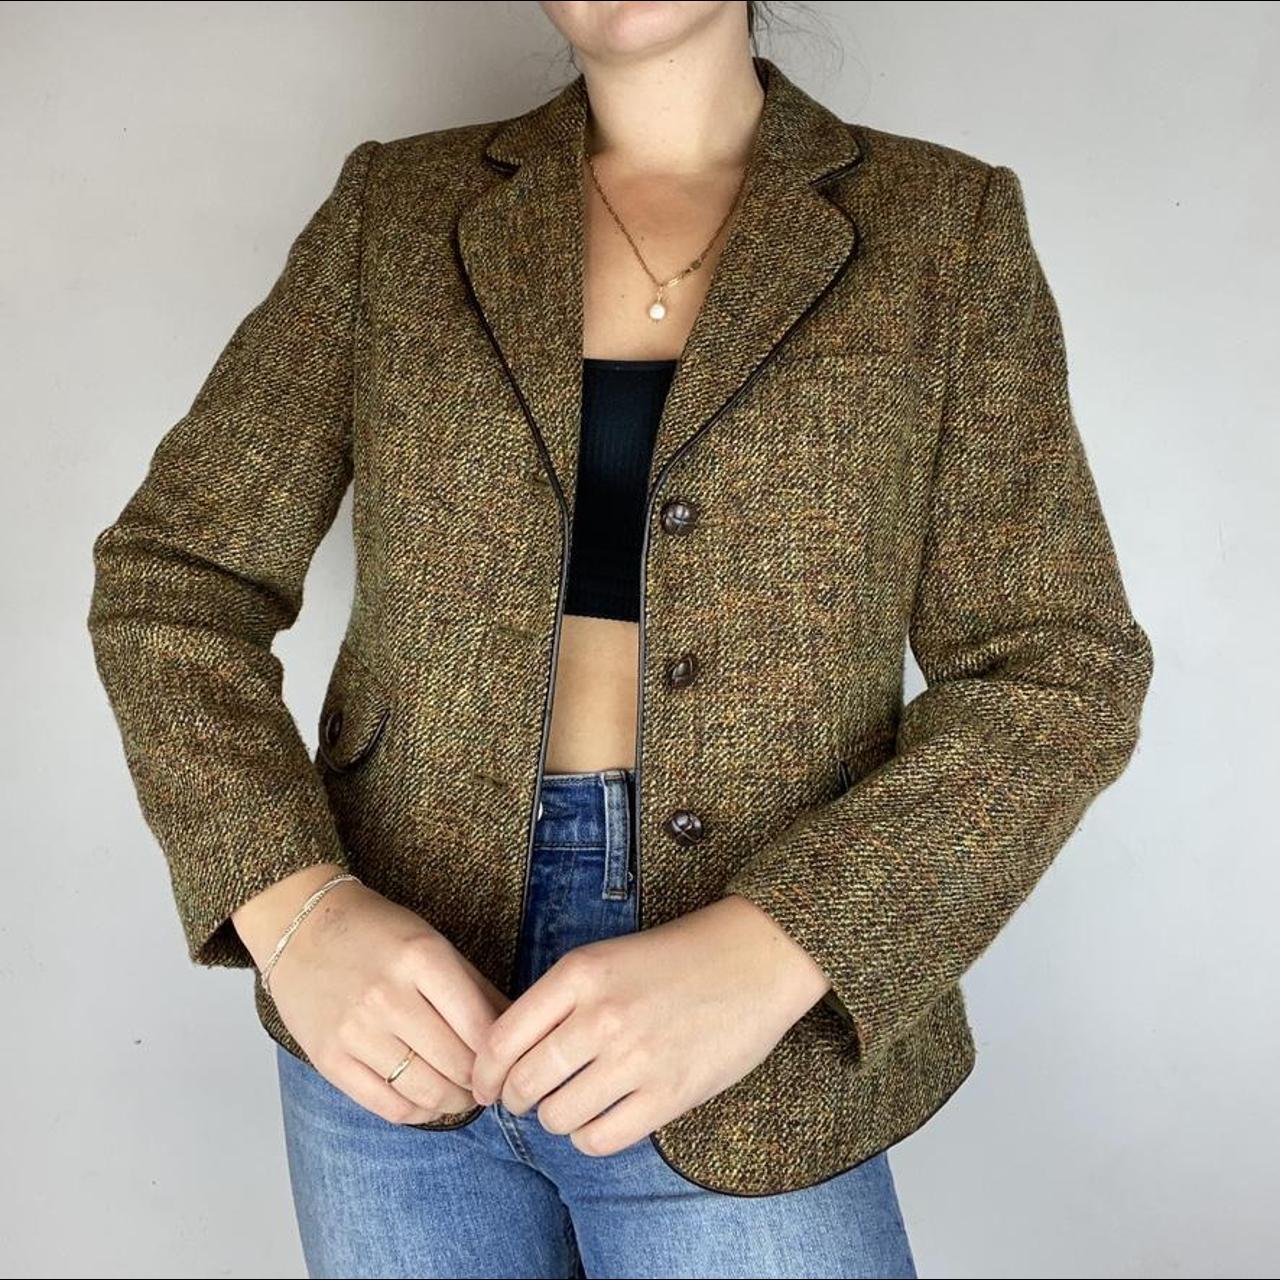 Product Image 2 - Vintage Tweed Blazer🧸
This vintage blazer